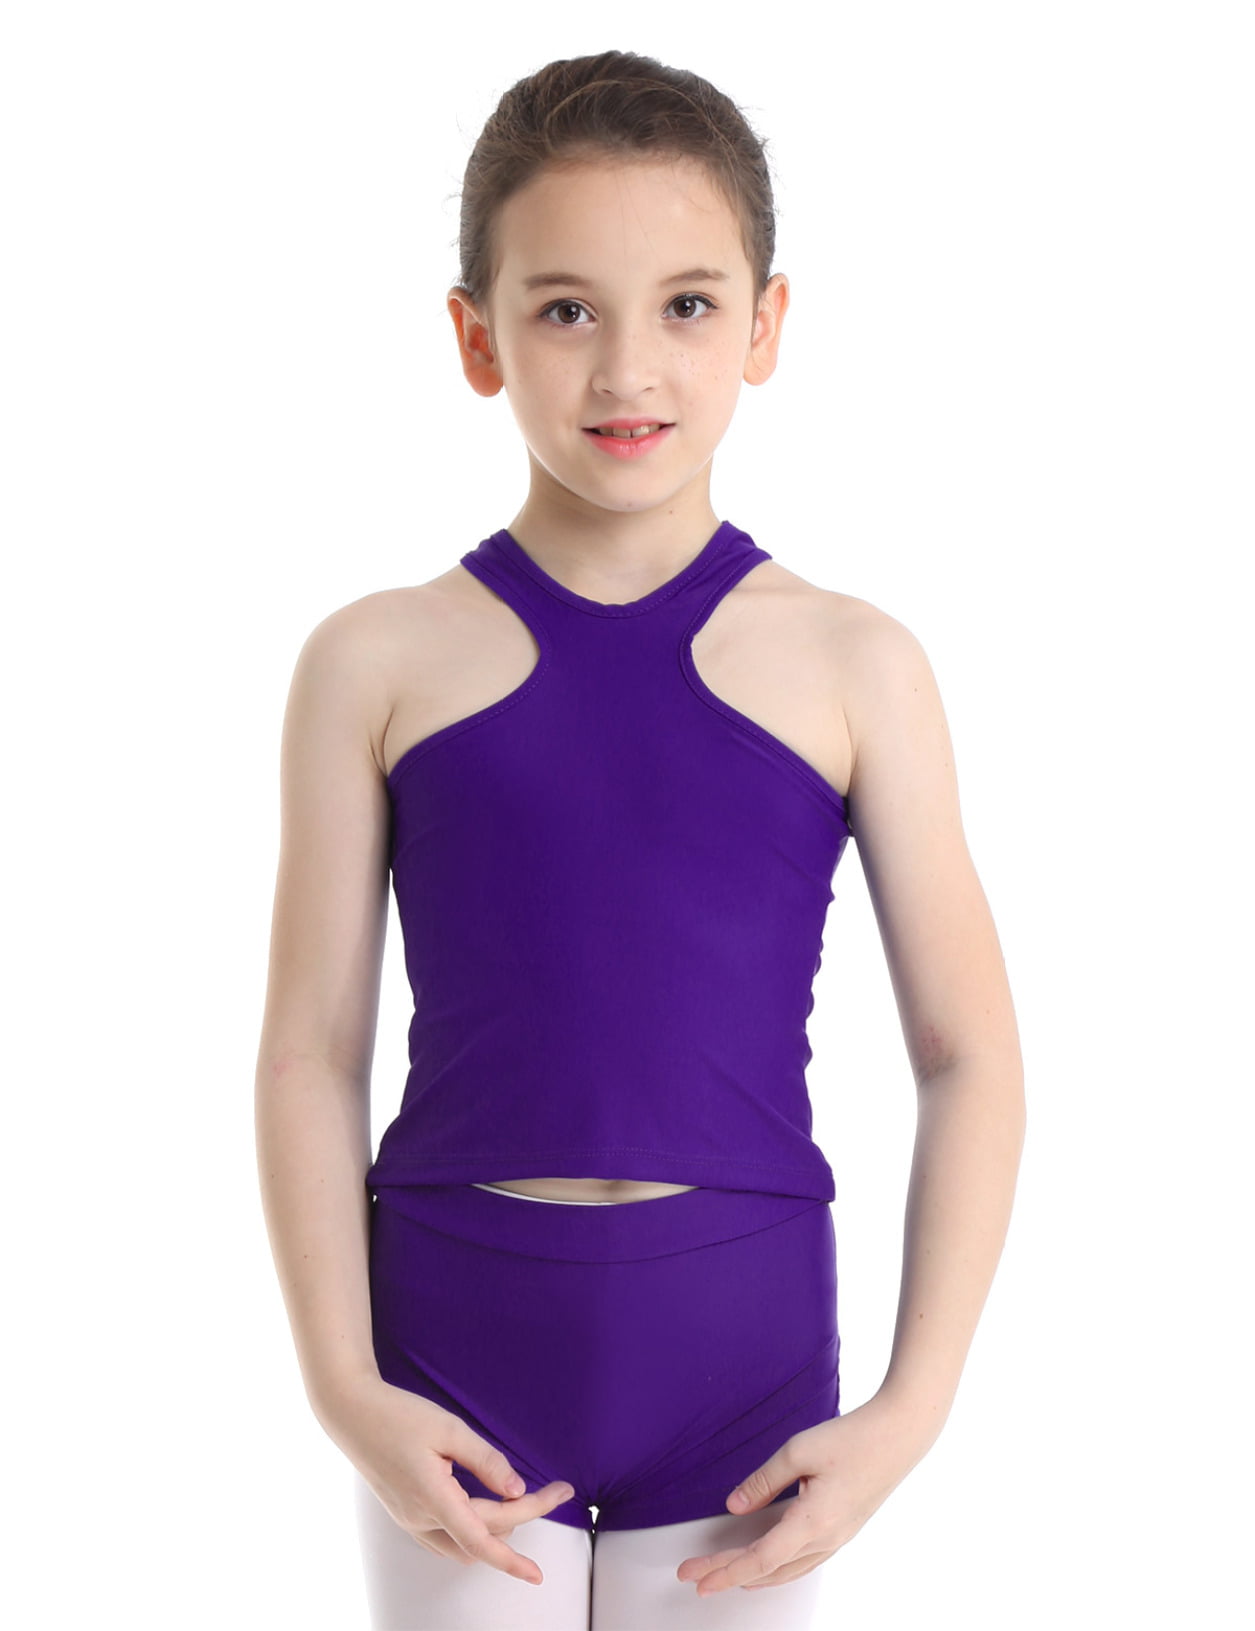 Kids Girls Dance Outfit Leotards Gymnastics Crop Top+Bottoms Sports Dance Wear 